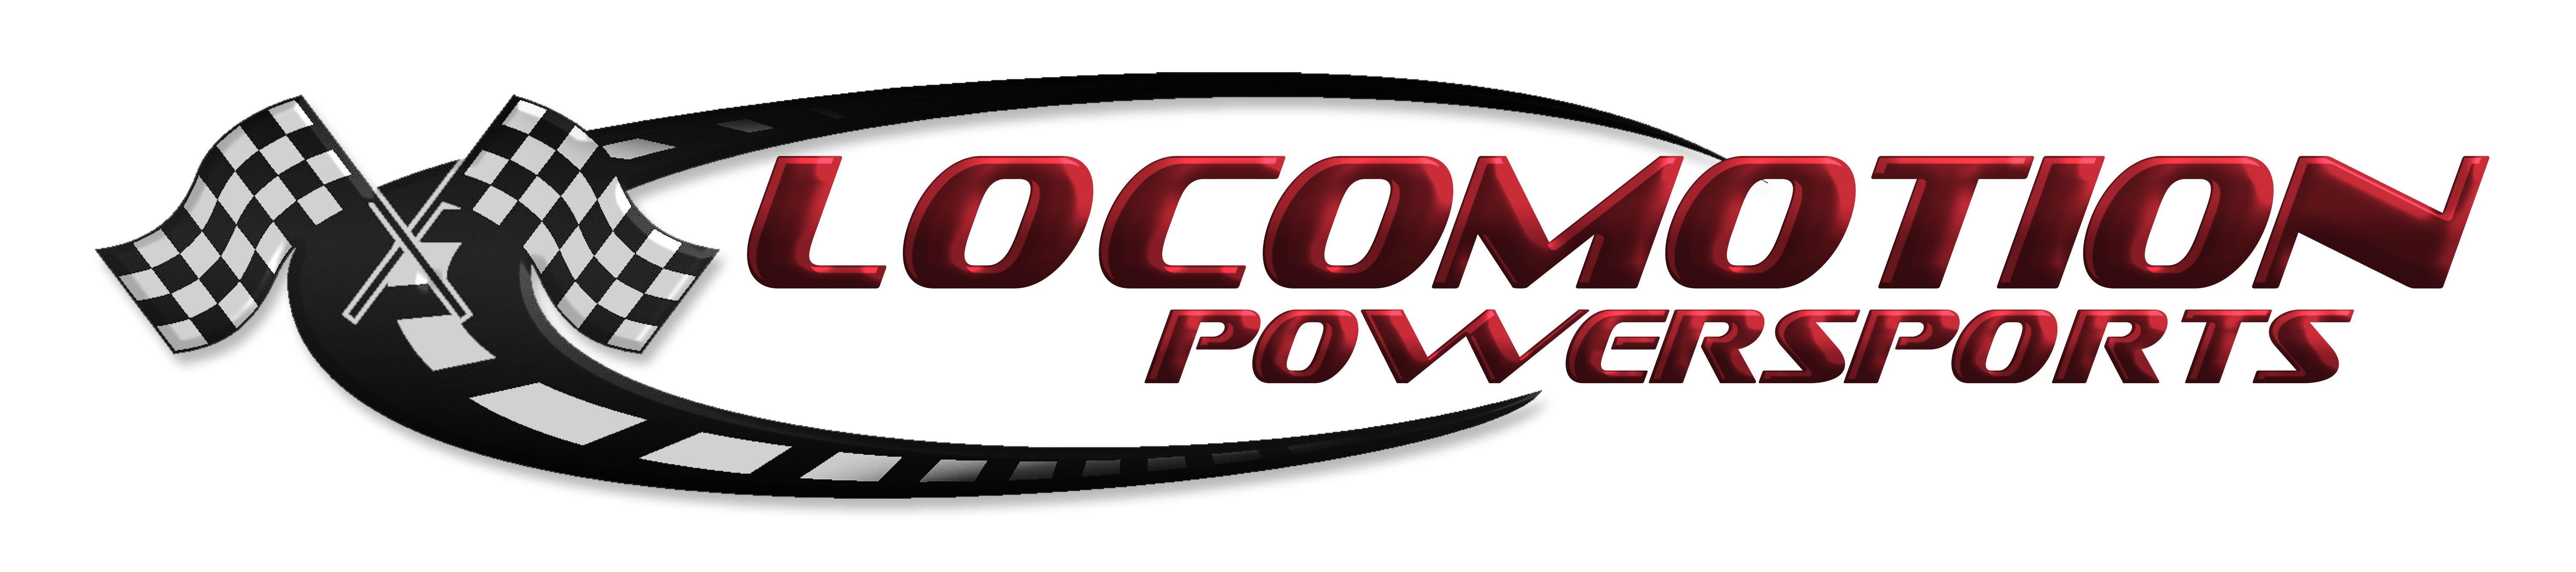 Locomotion Logo - LOCOMOTION POWERSPORTS